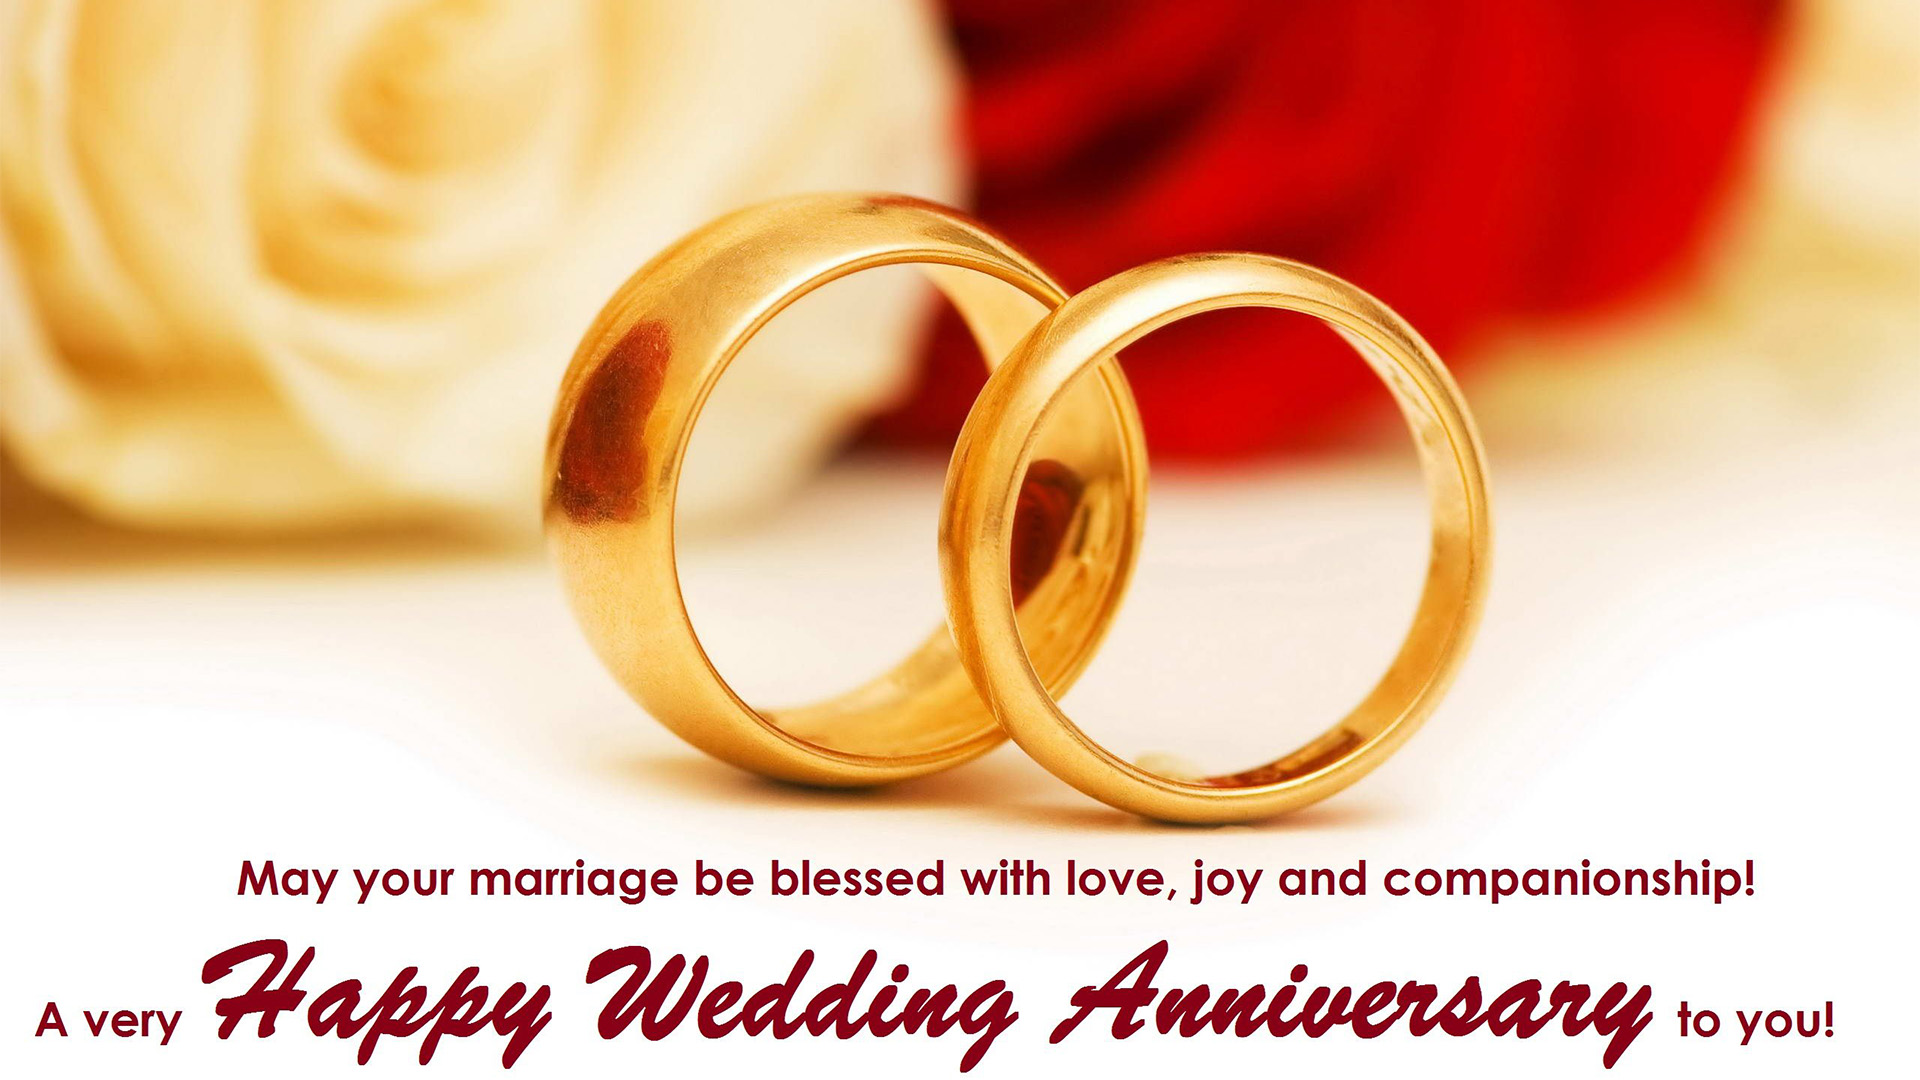 beautiful marriage anniversary wishes image hd